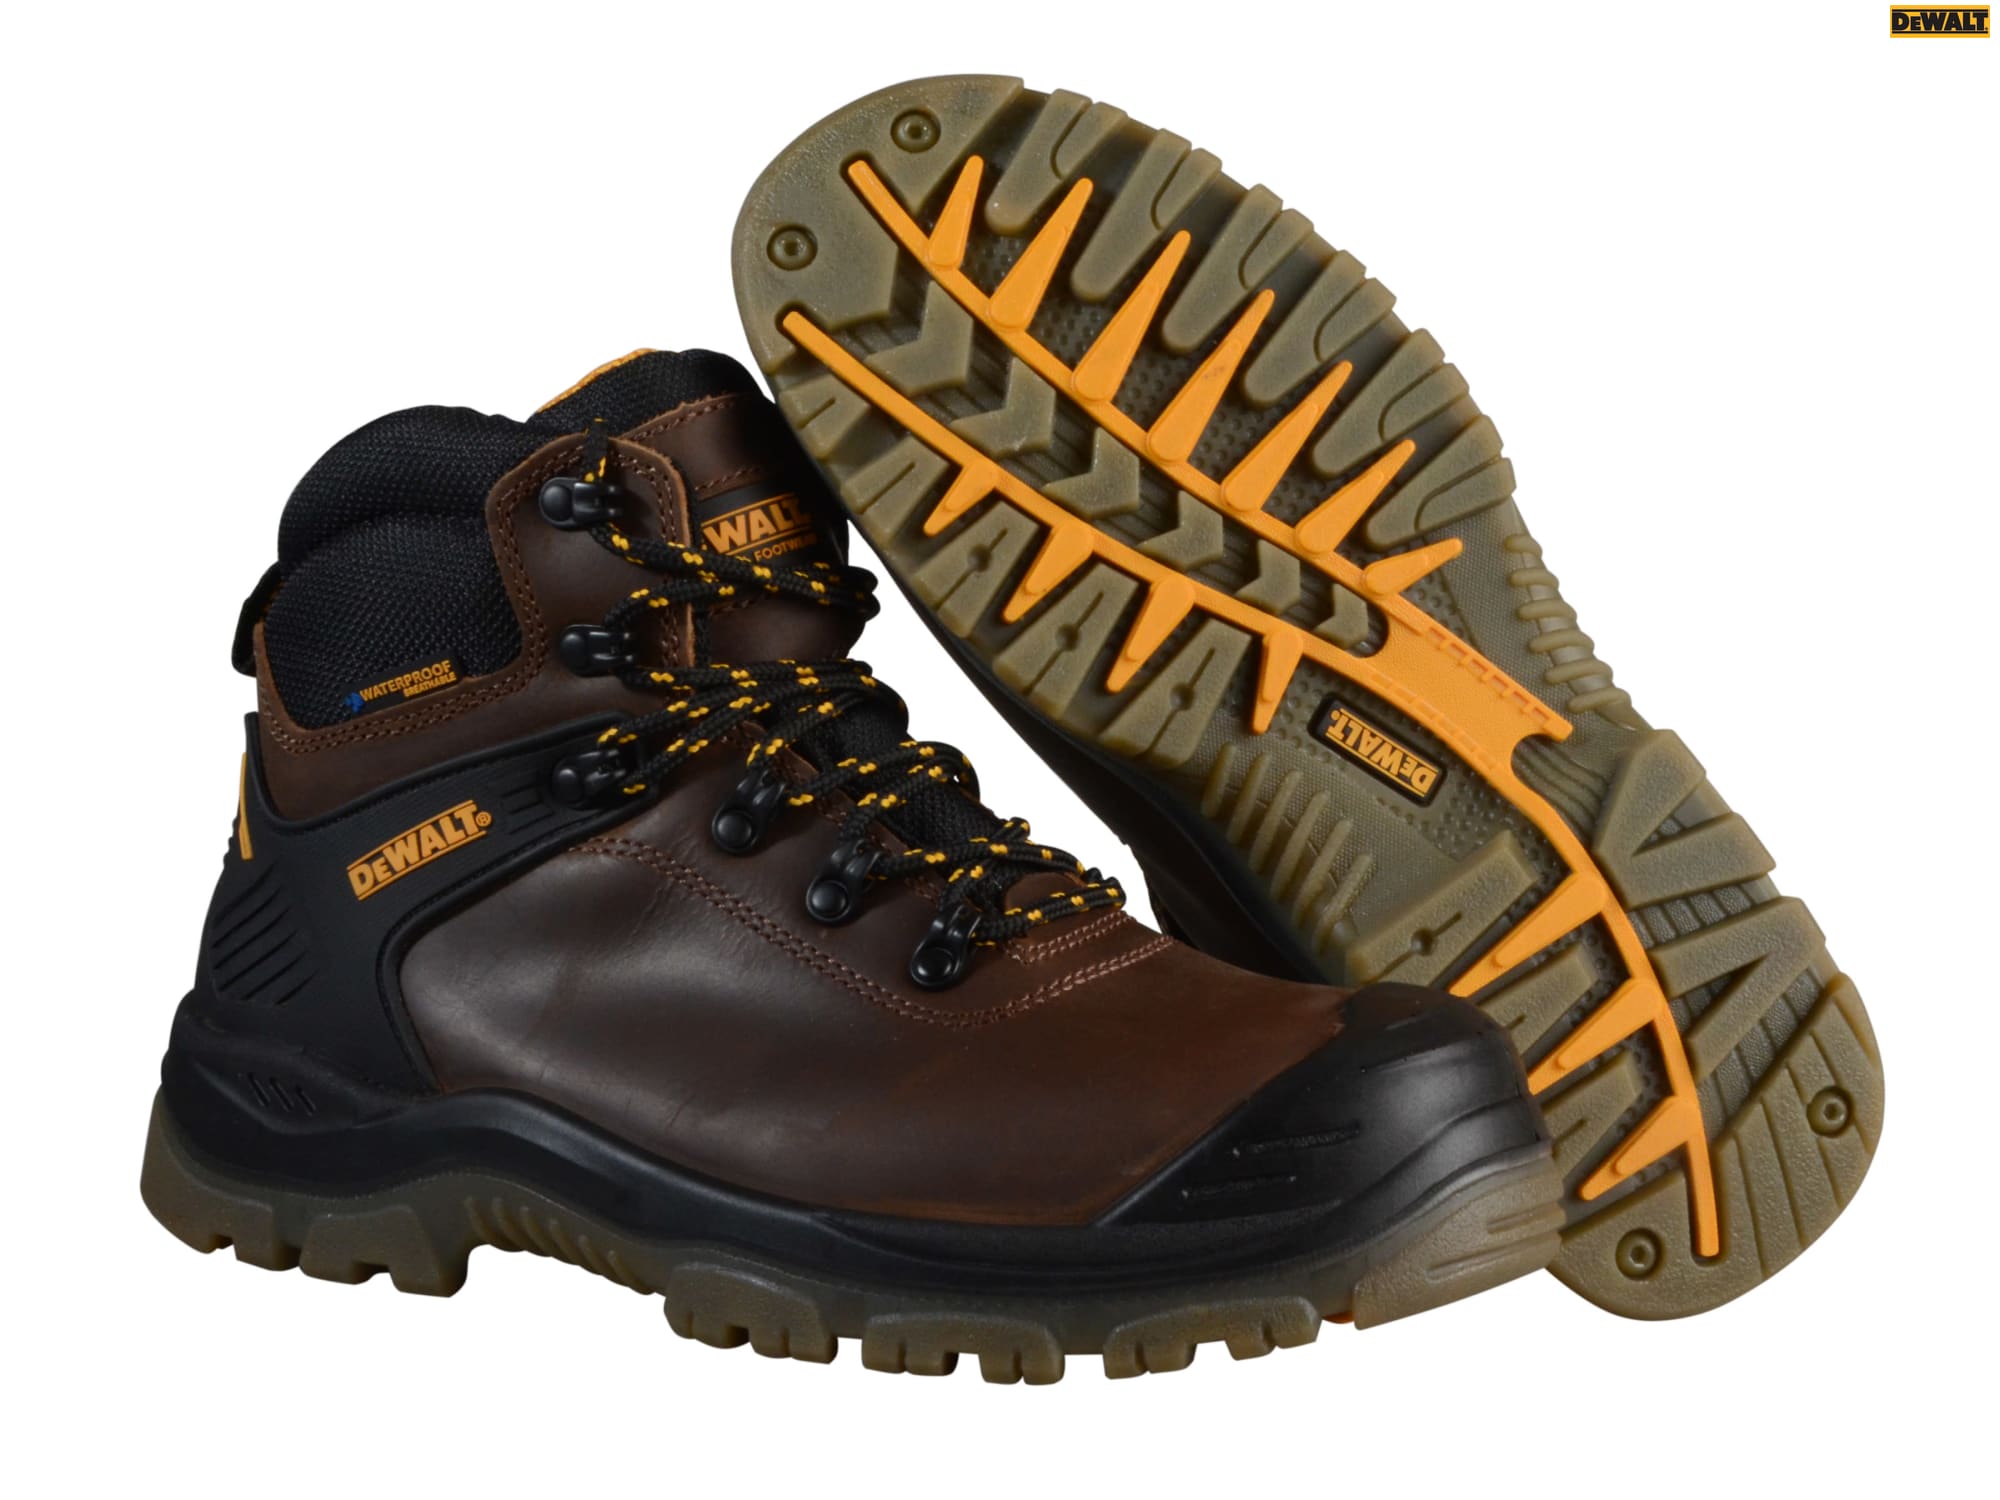 DeWalt Newark S3 Waterproof Safety Hiker Boots